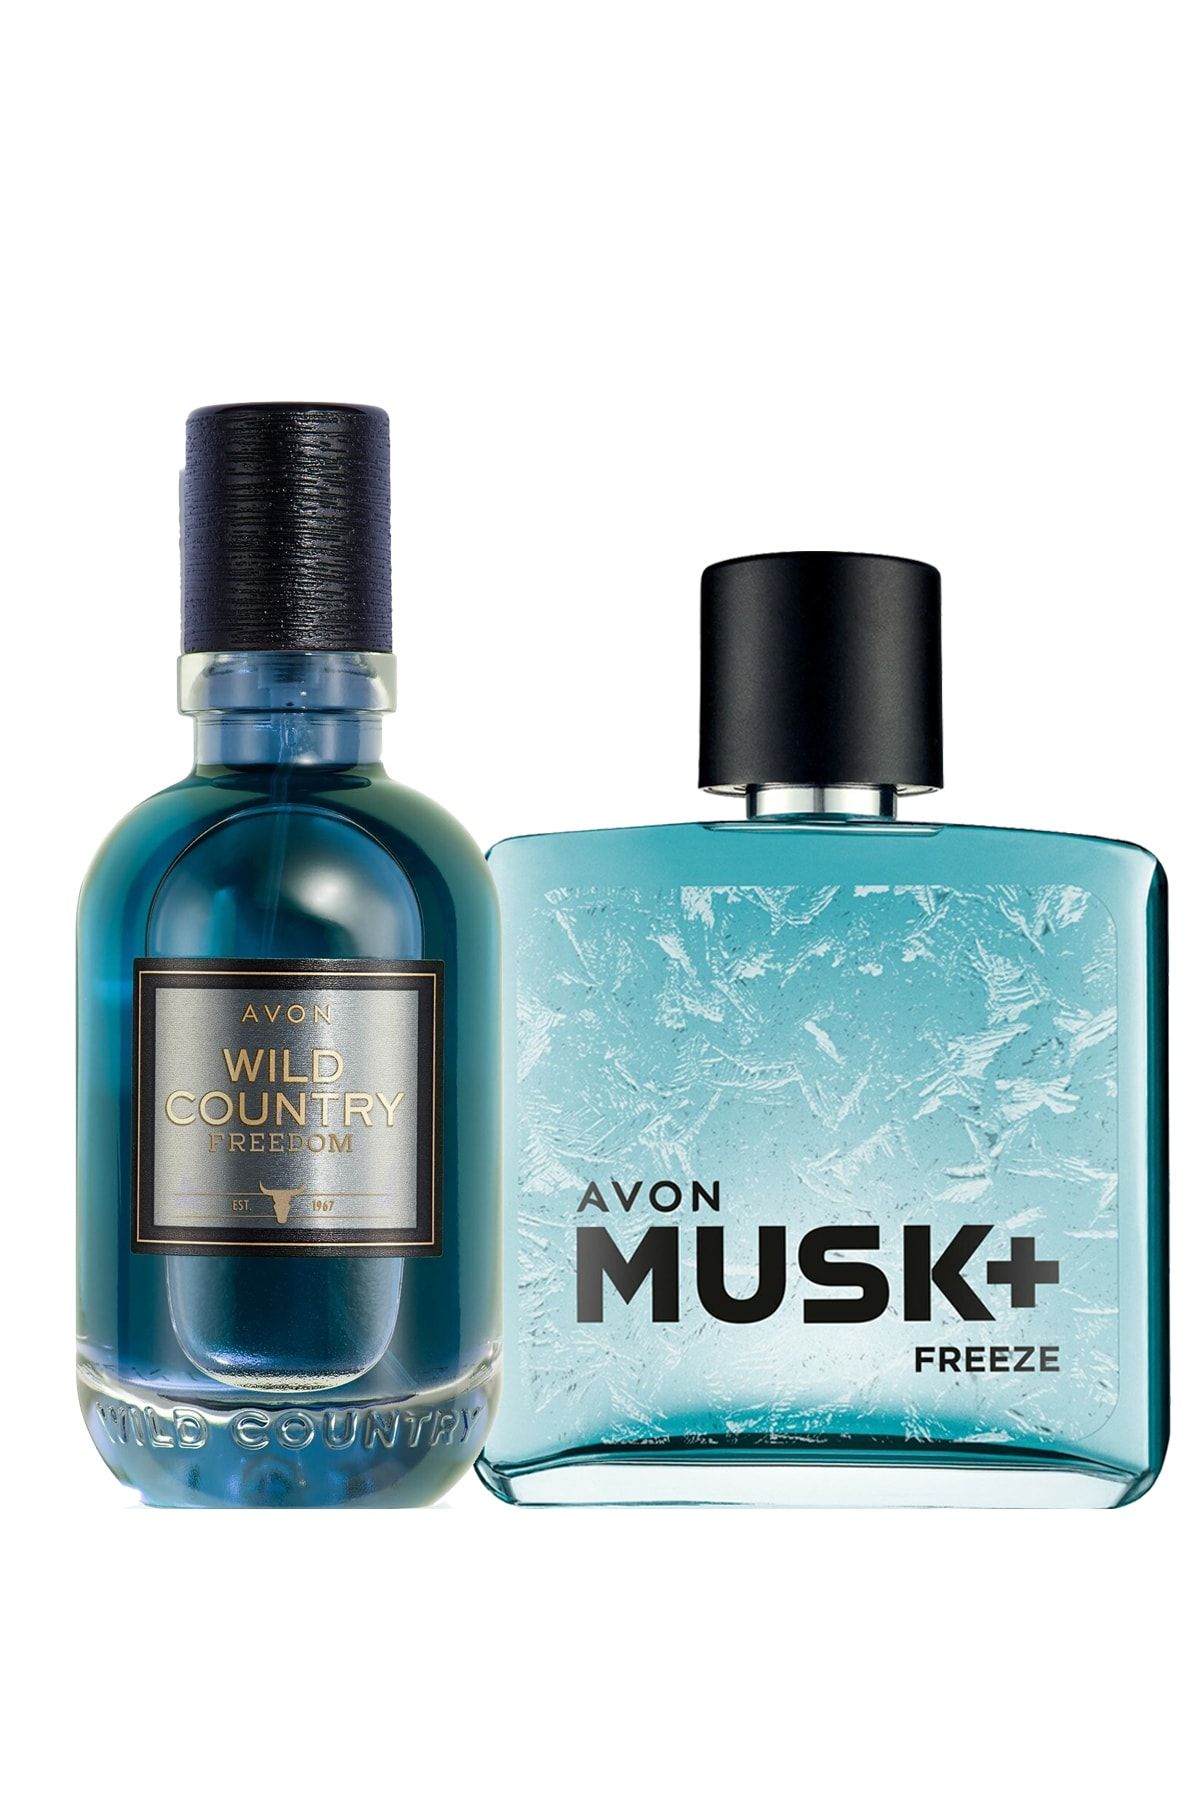 Avon Wild Country Freedom Ve Musk Freeze Erkek Parfüm Paketi